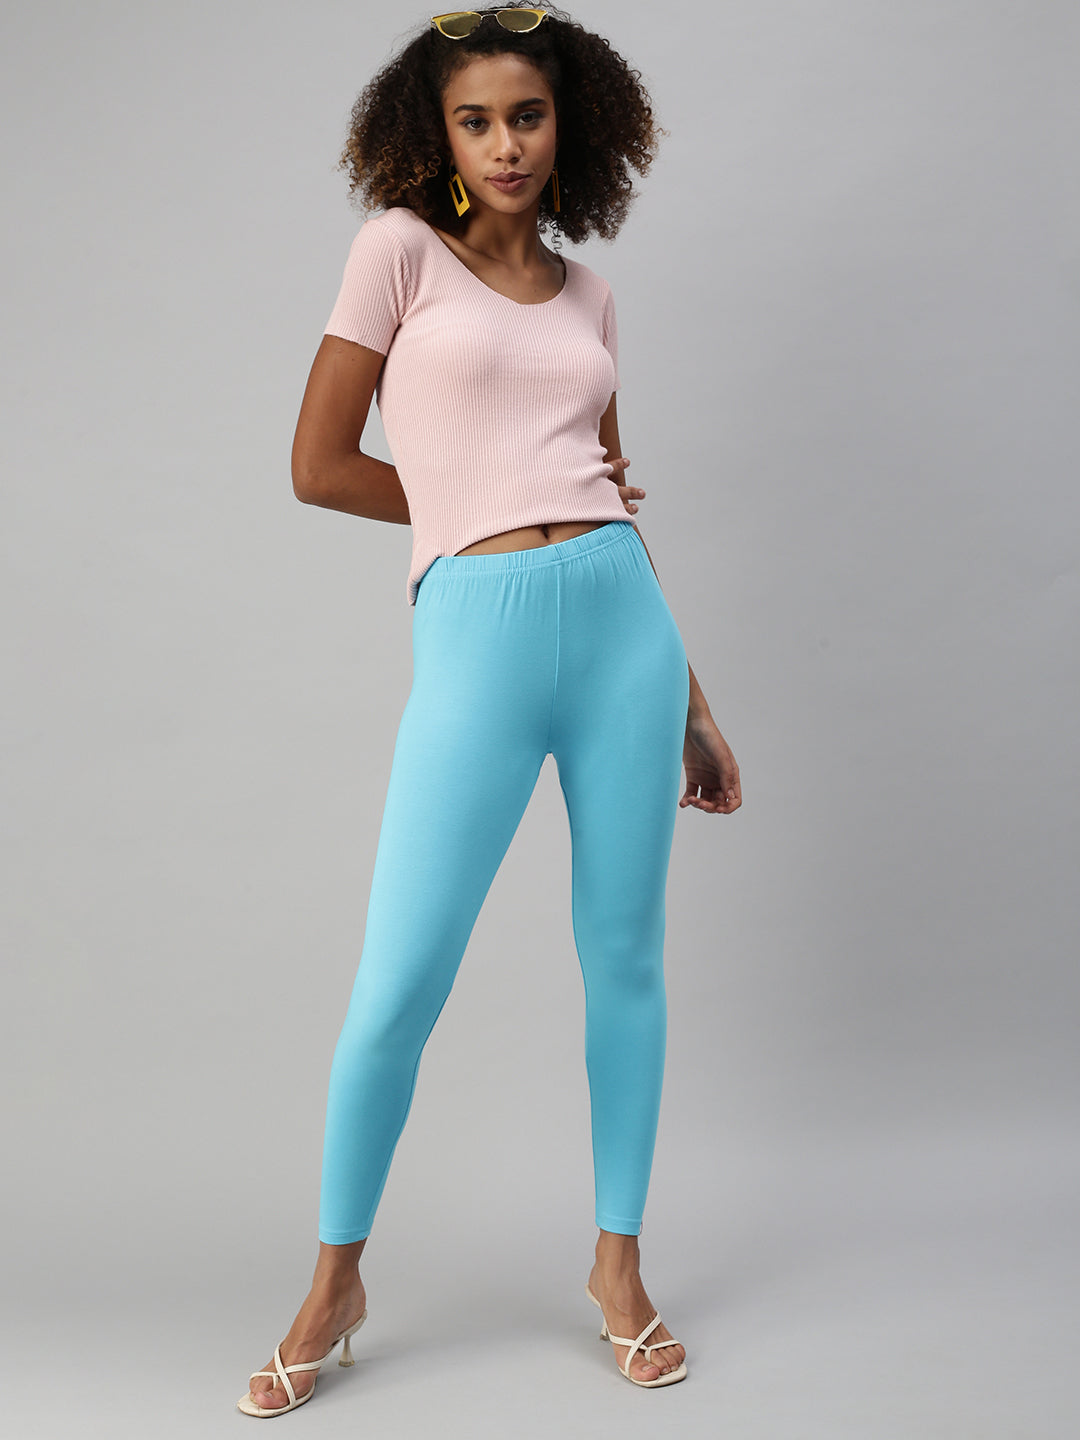 Buy Aqua Blue Solid Leggings For Women Online In India – VILAN APPARELS